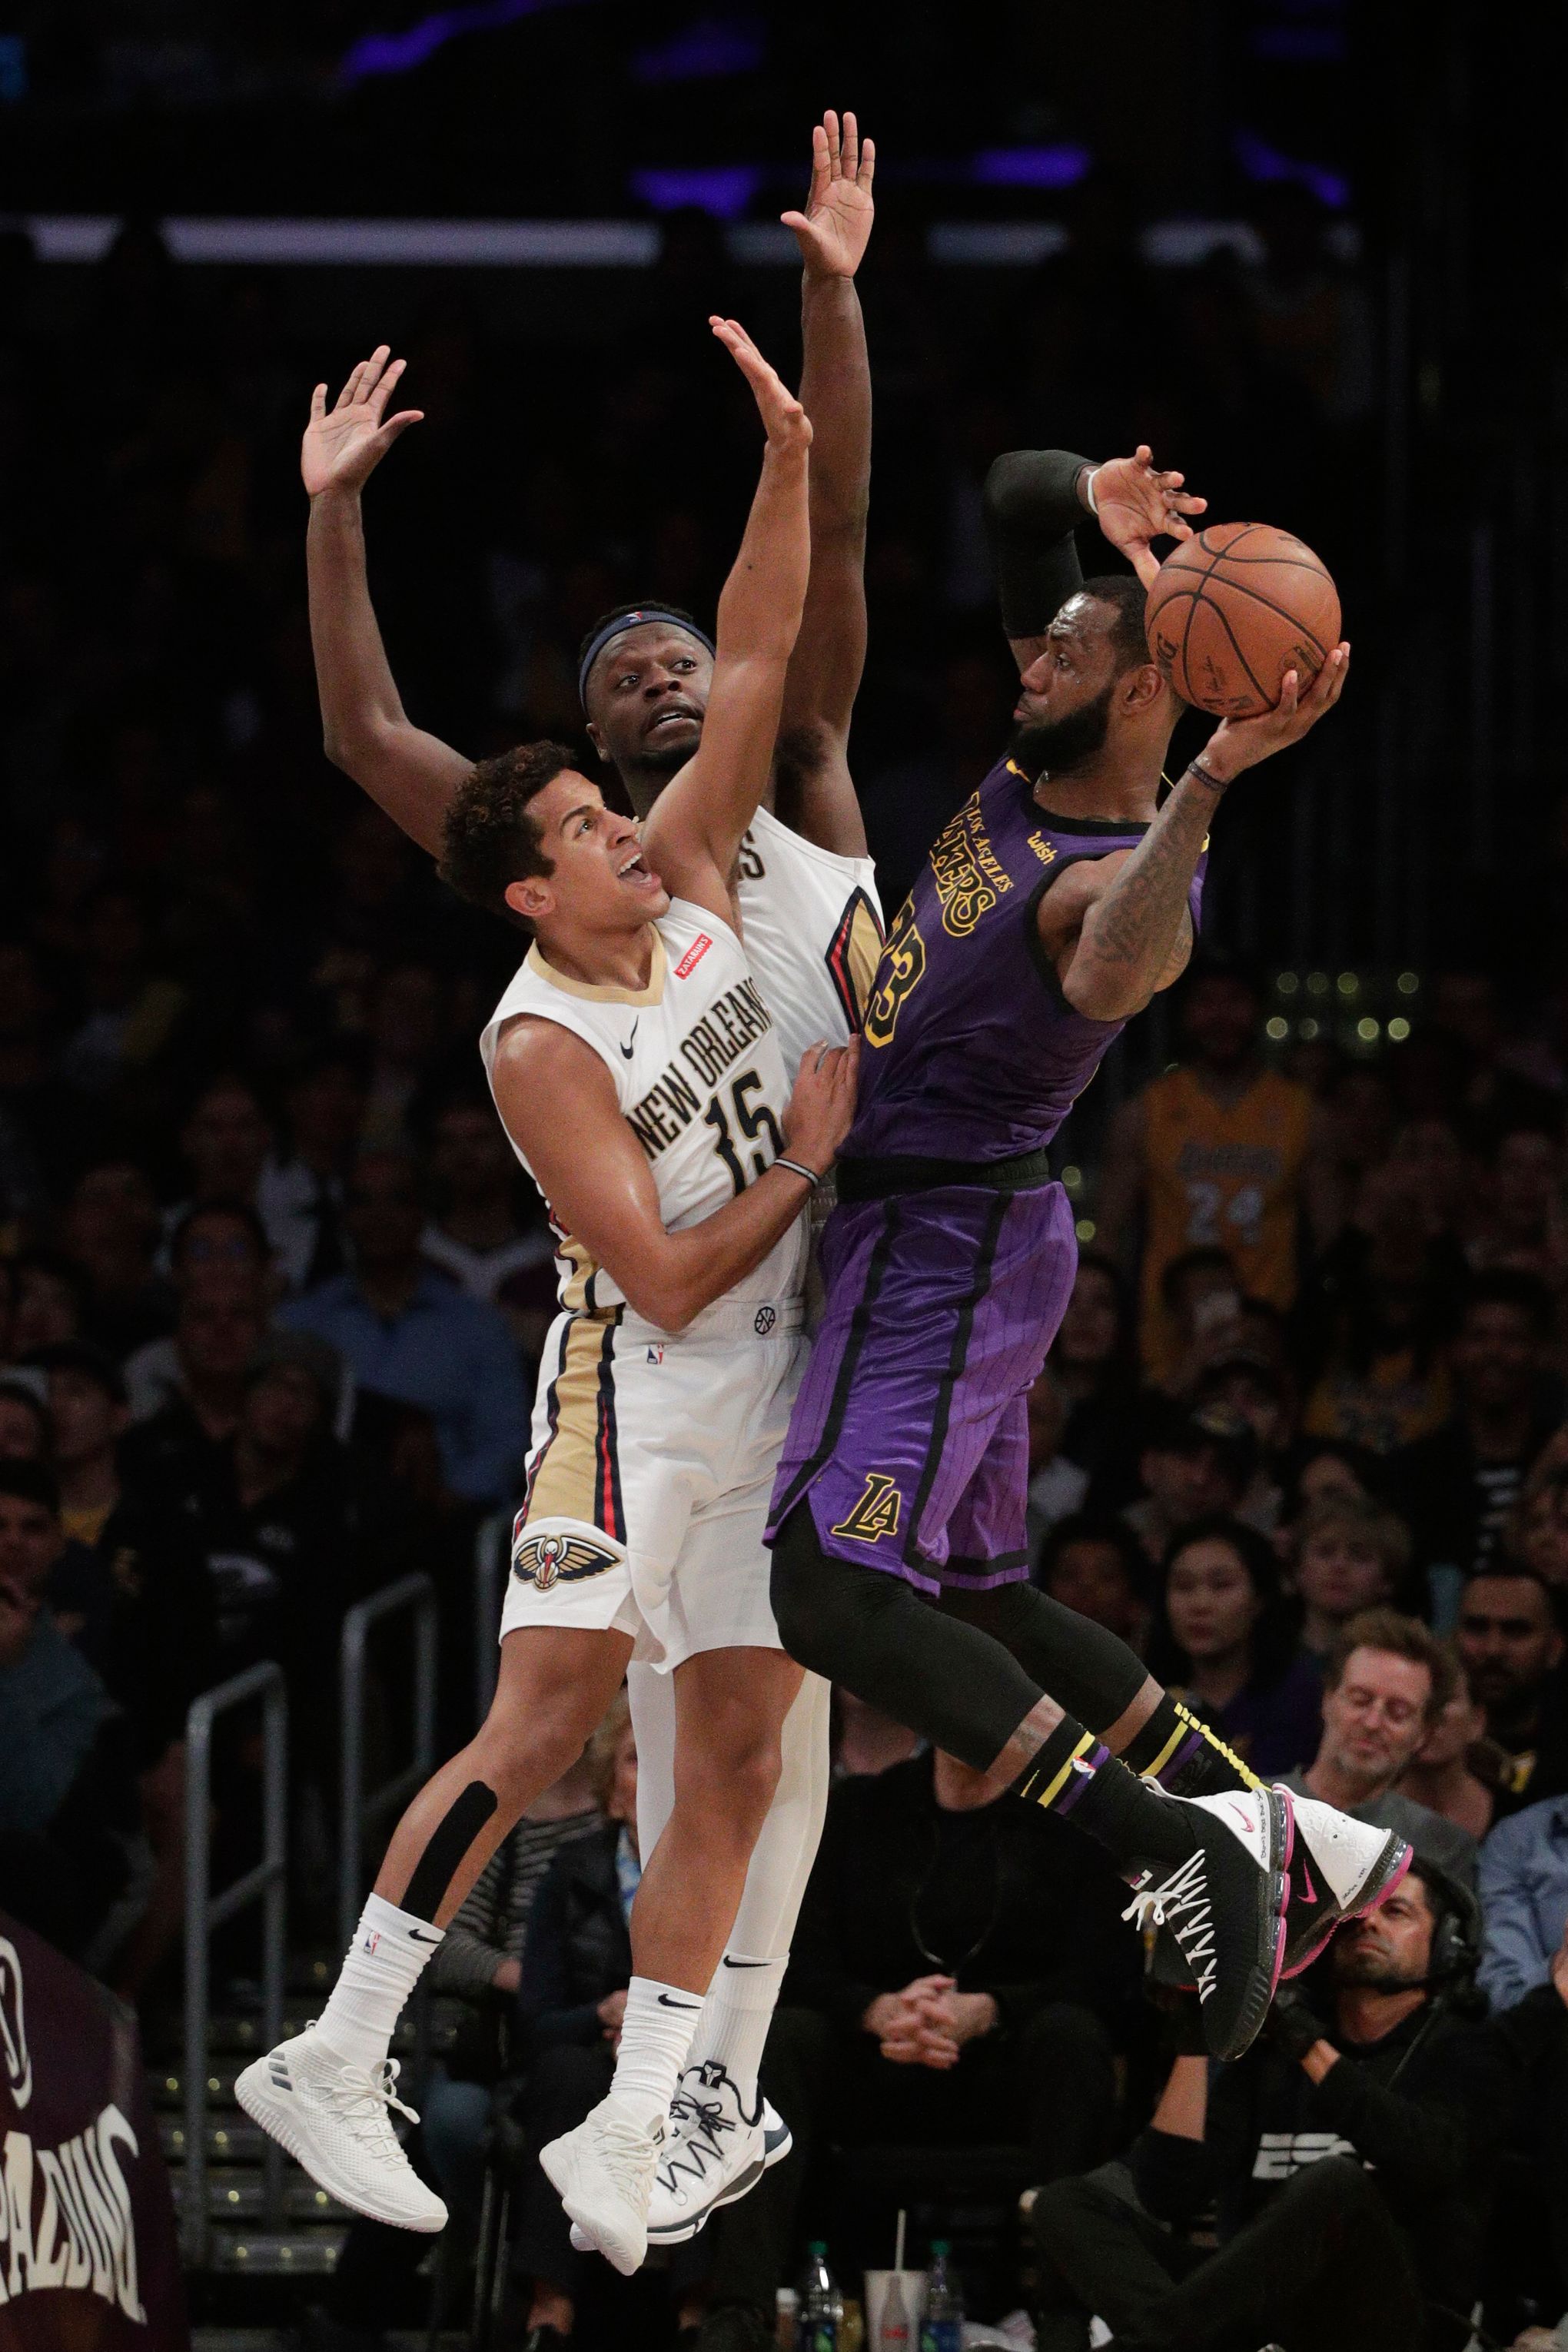 Lakers beat Pelicans to push their winning streak to 9